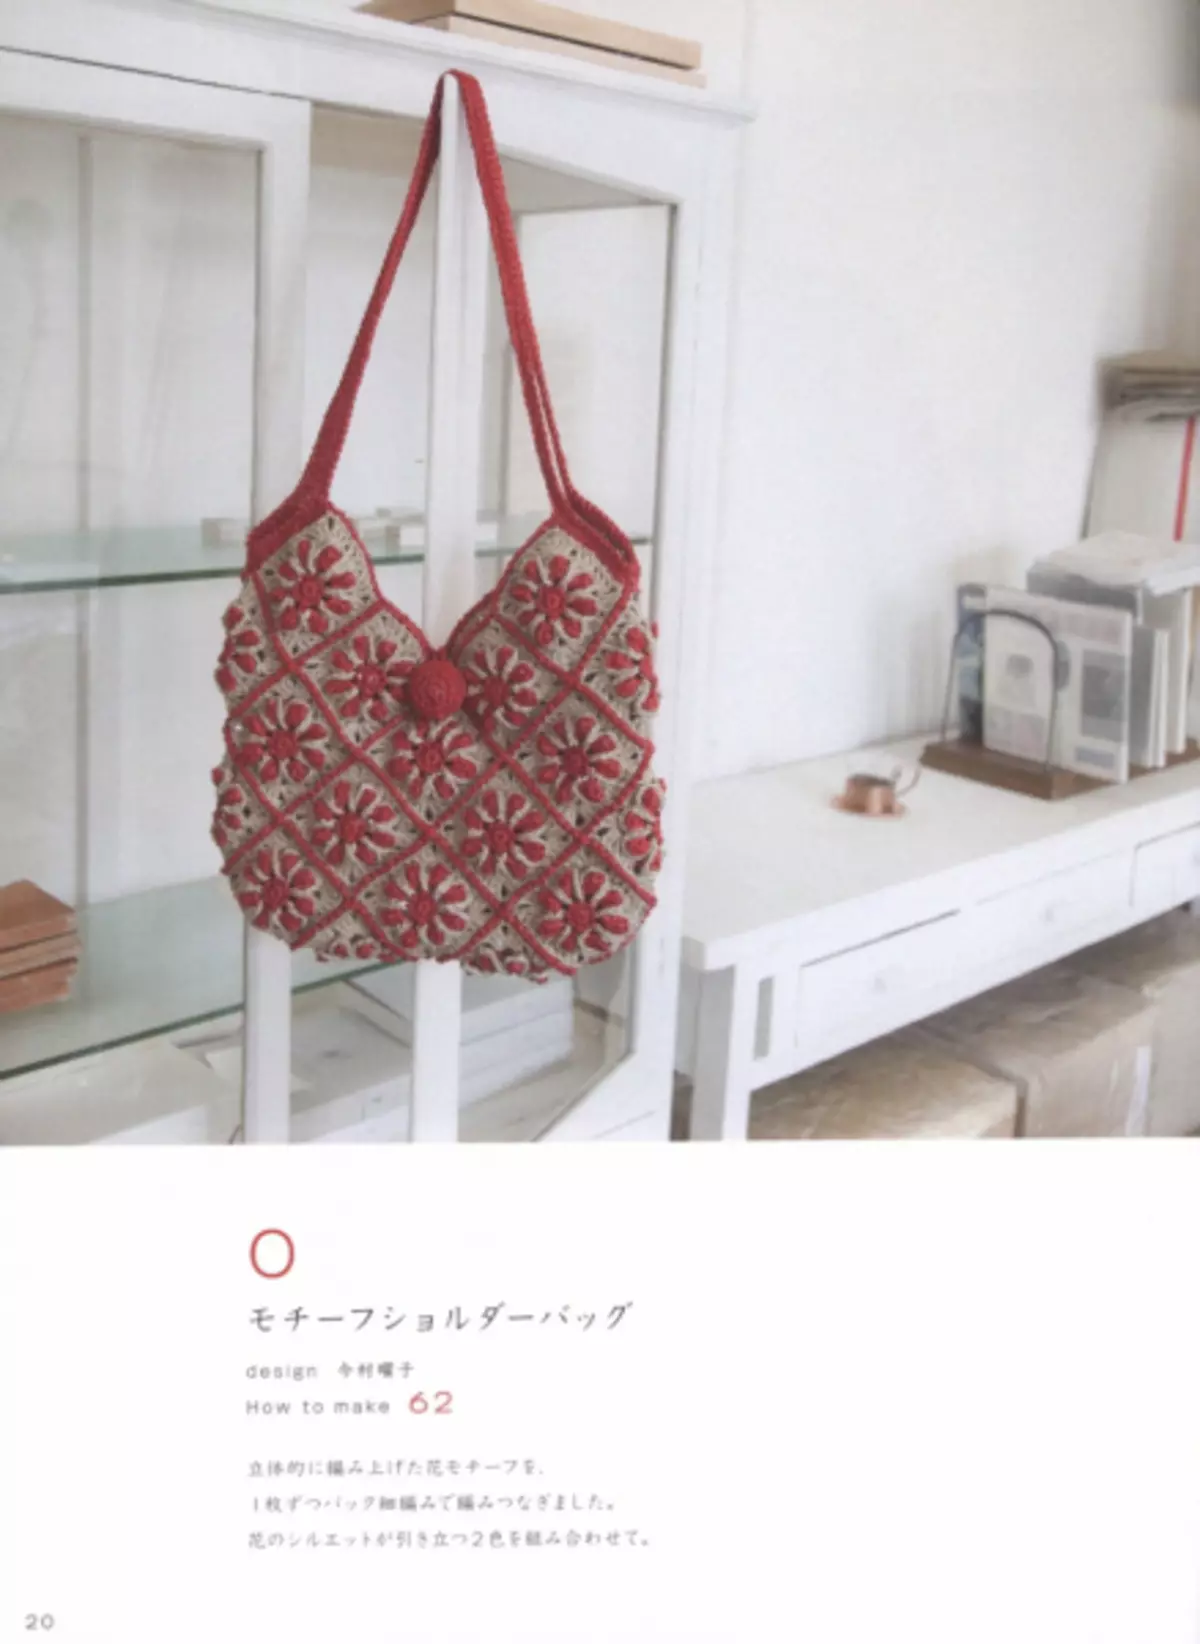 В'язання сумок. Журнал «Crochet Mania's Bags»